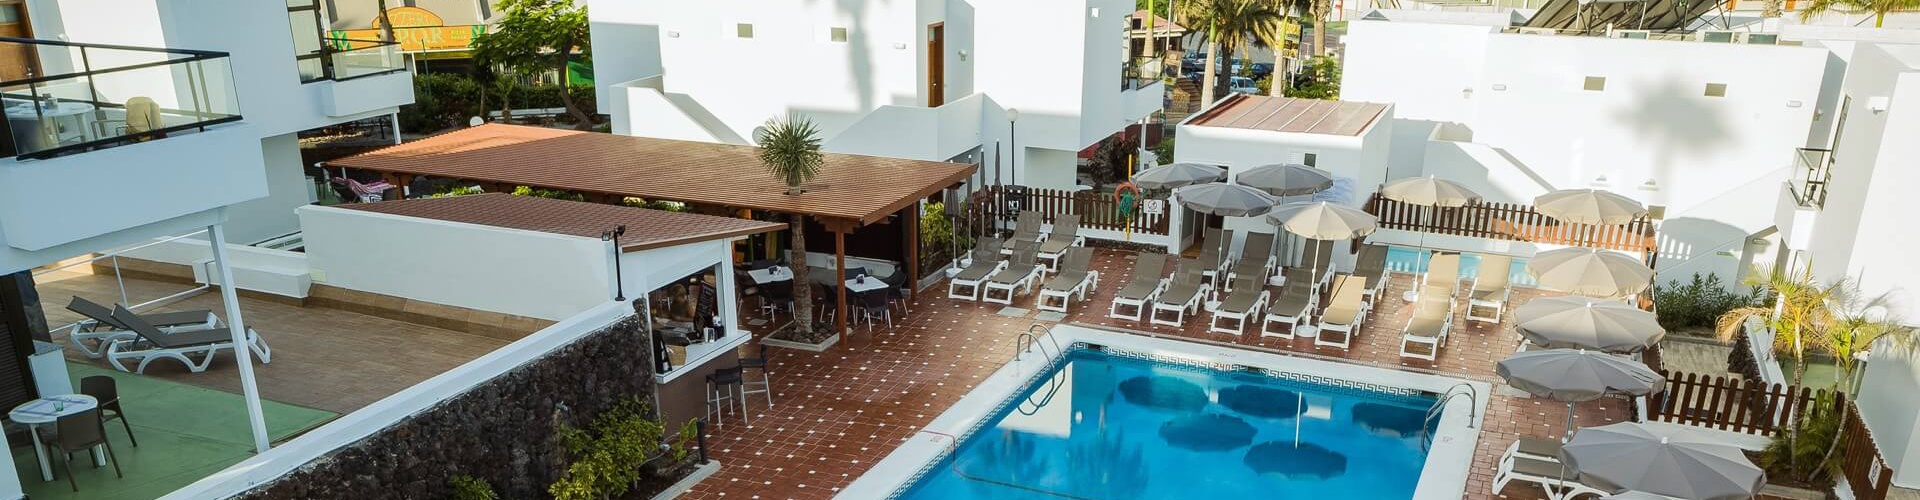 Coral Hotels - Costa Adeje - 